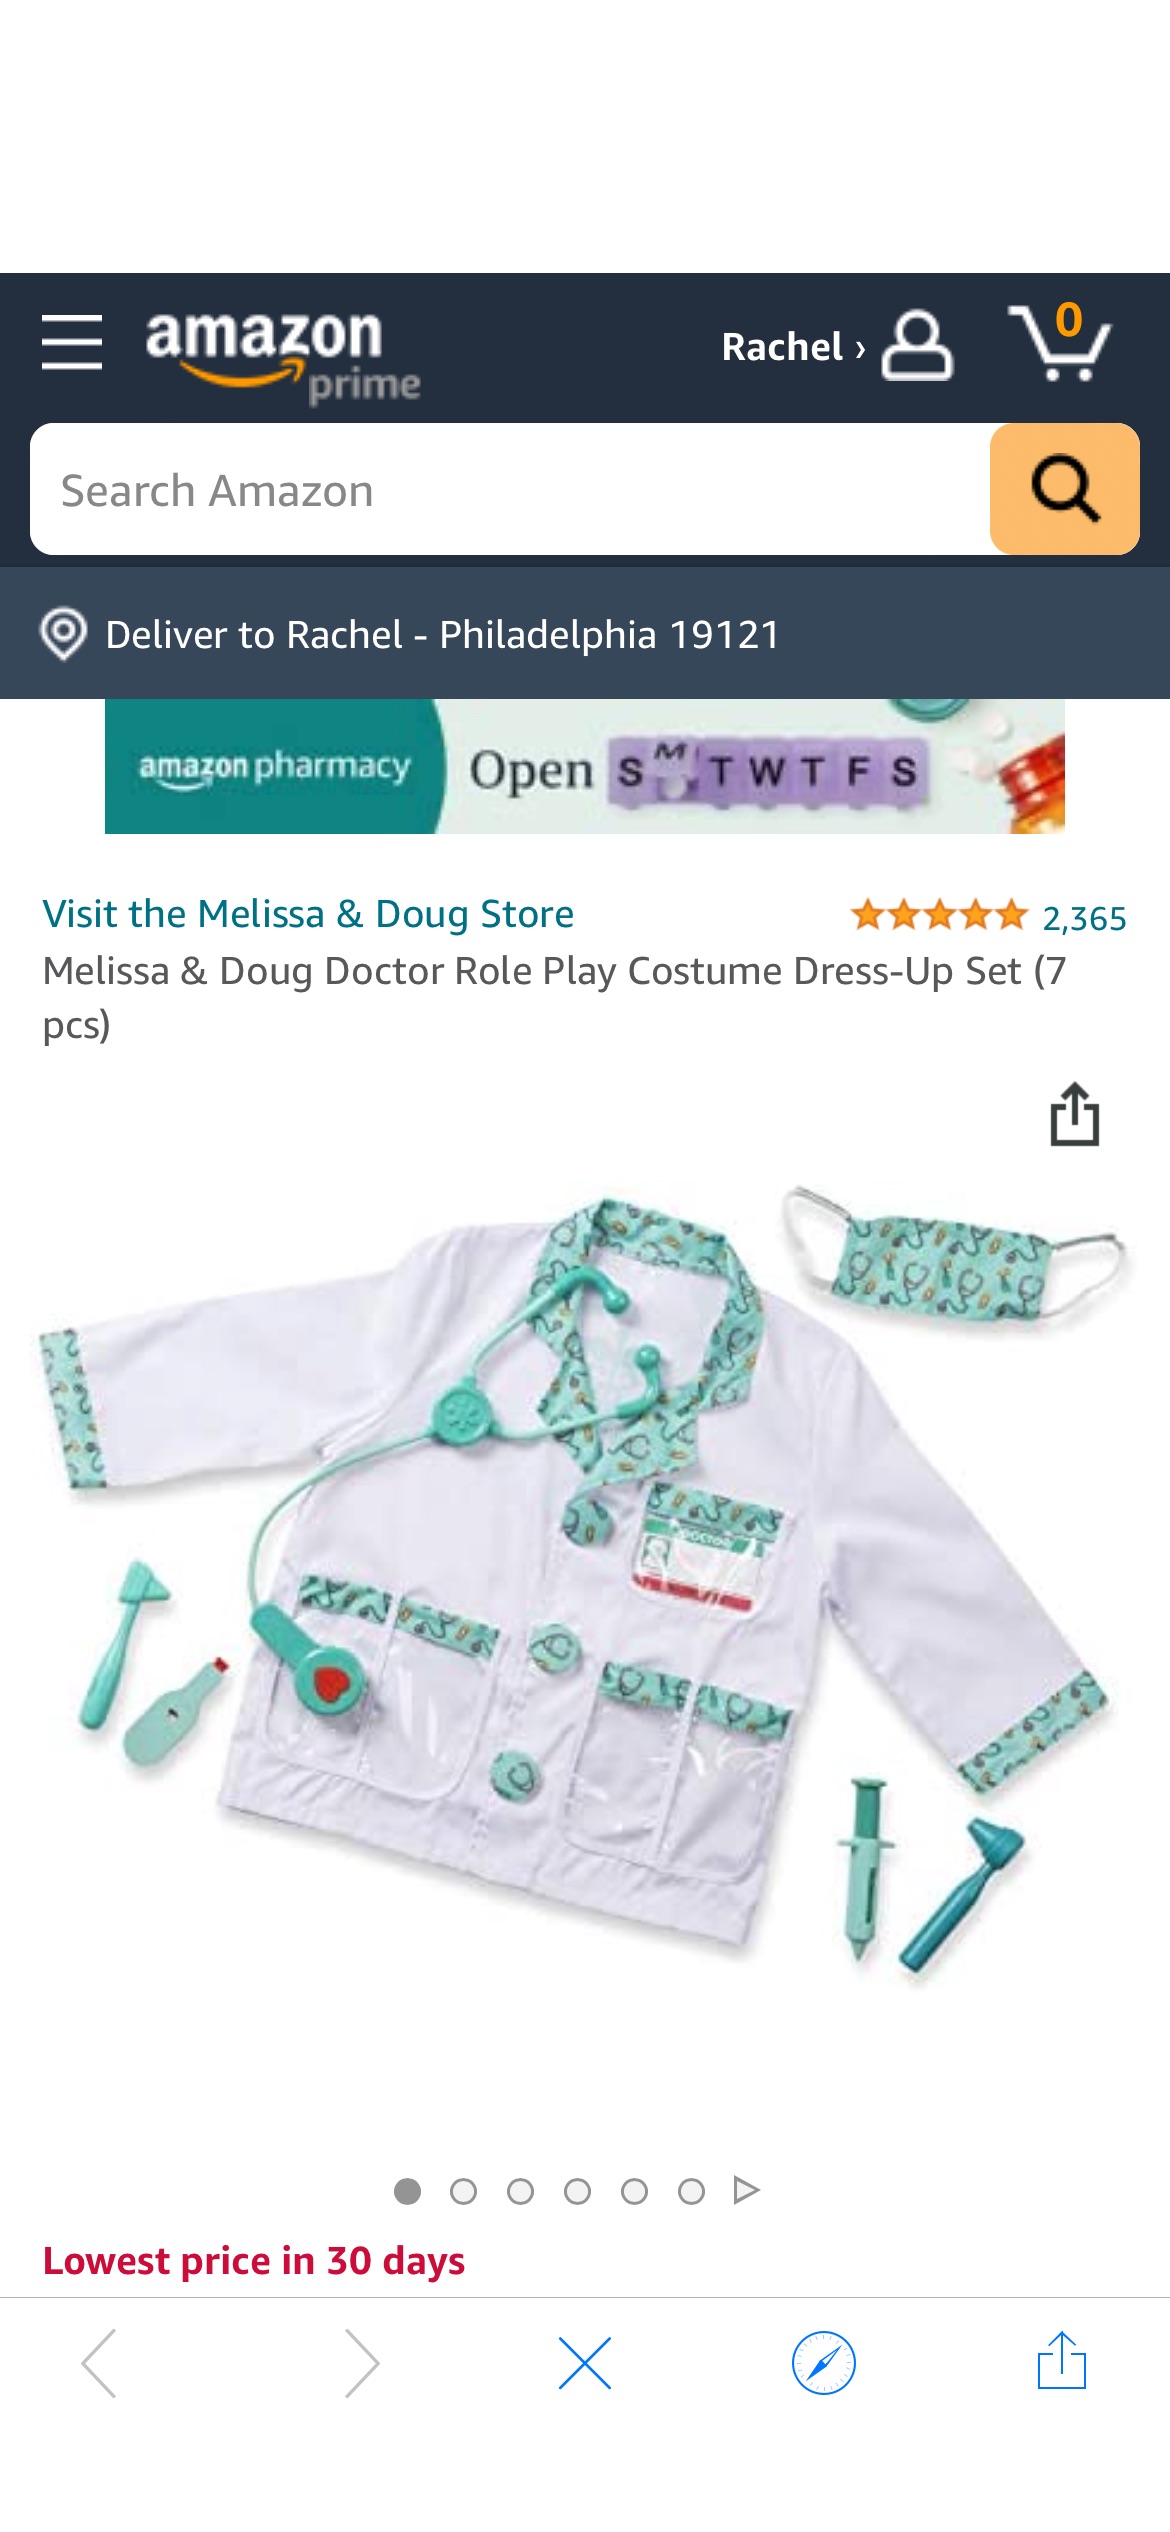 Amazon.com: Melissa & Doug Doctor Role Play Costume Dress-Up Set (7 pcs) : Melissa & Doug: Toys & Games